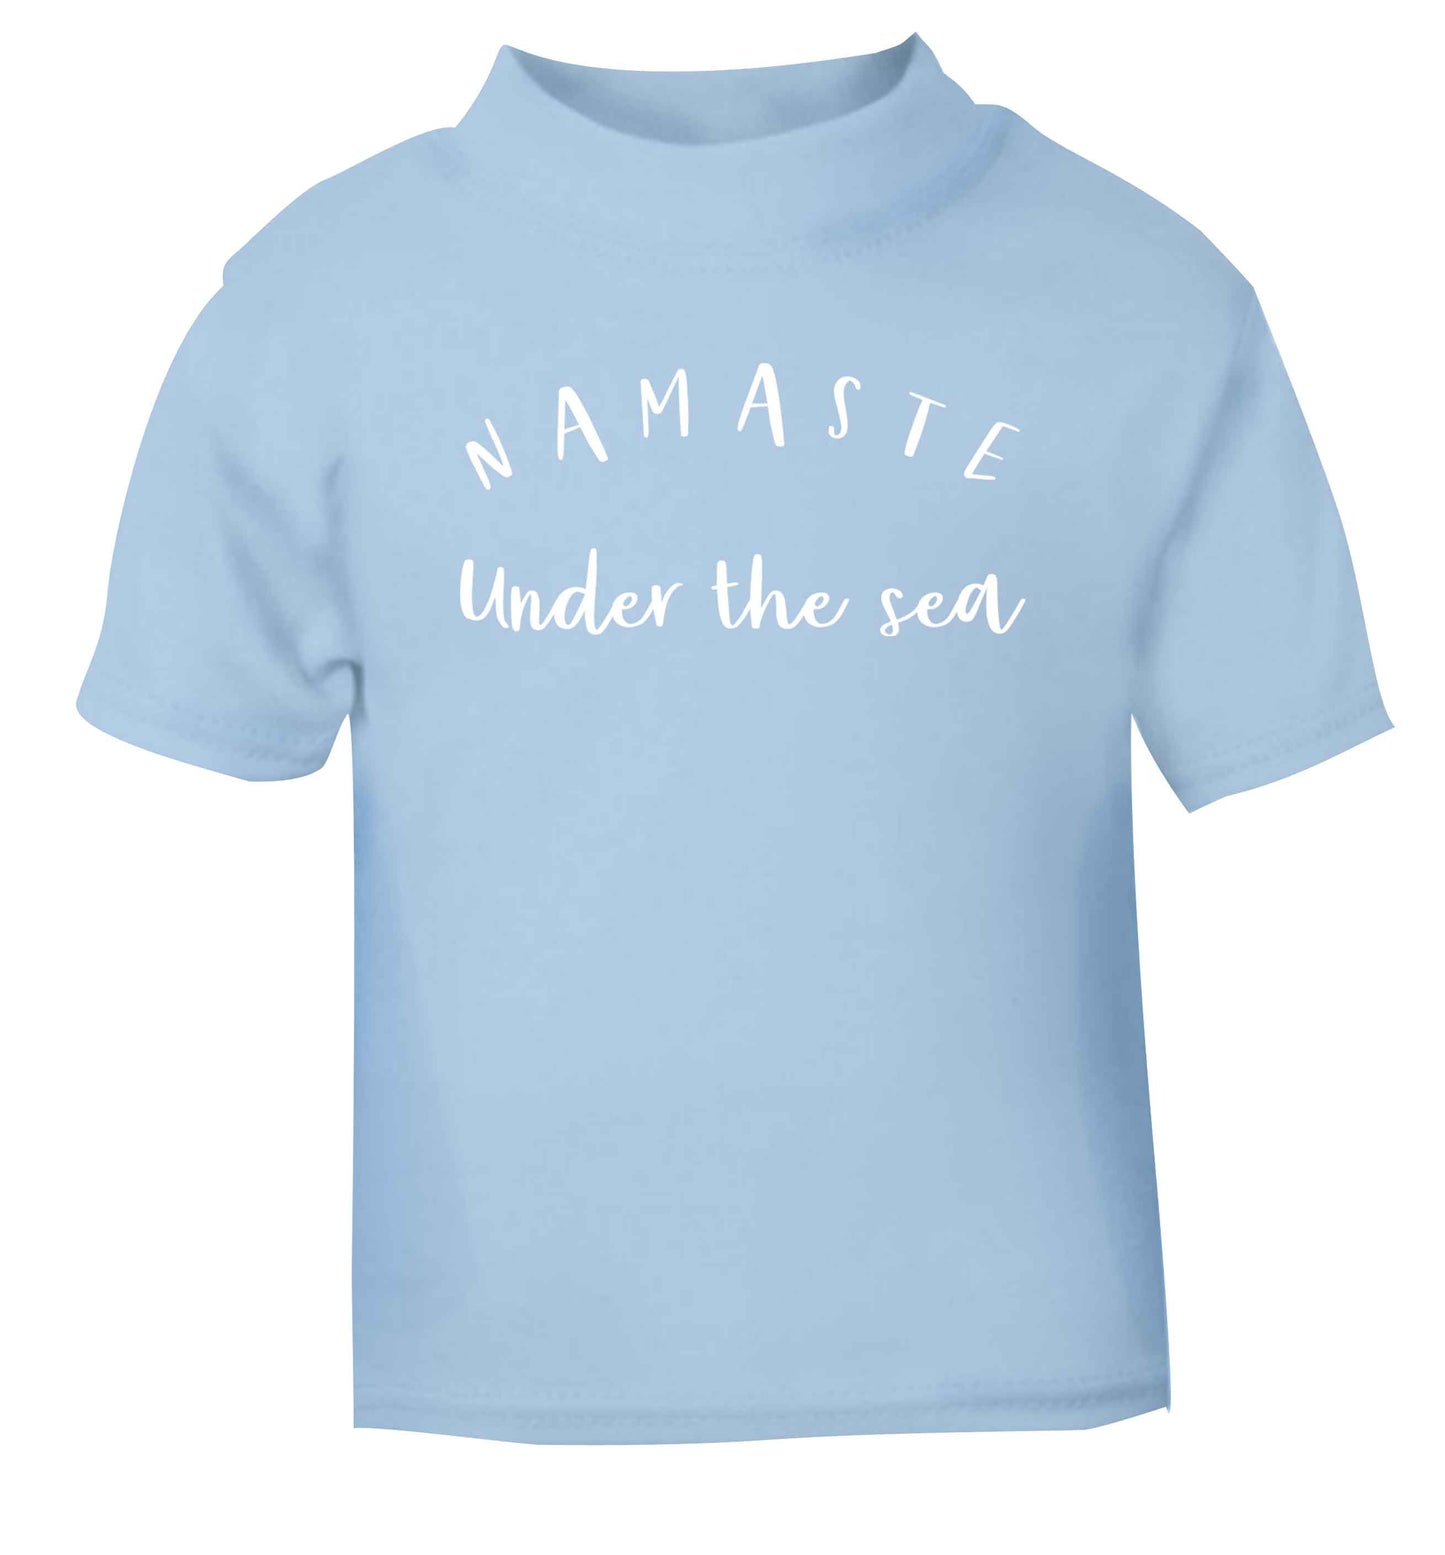 Namaste under the water light blue Baby Toddler Tshirt 2 Years